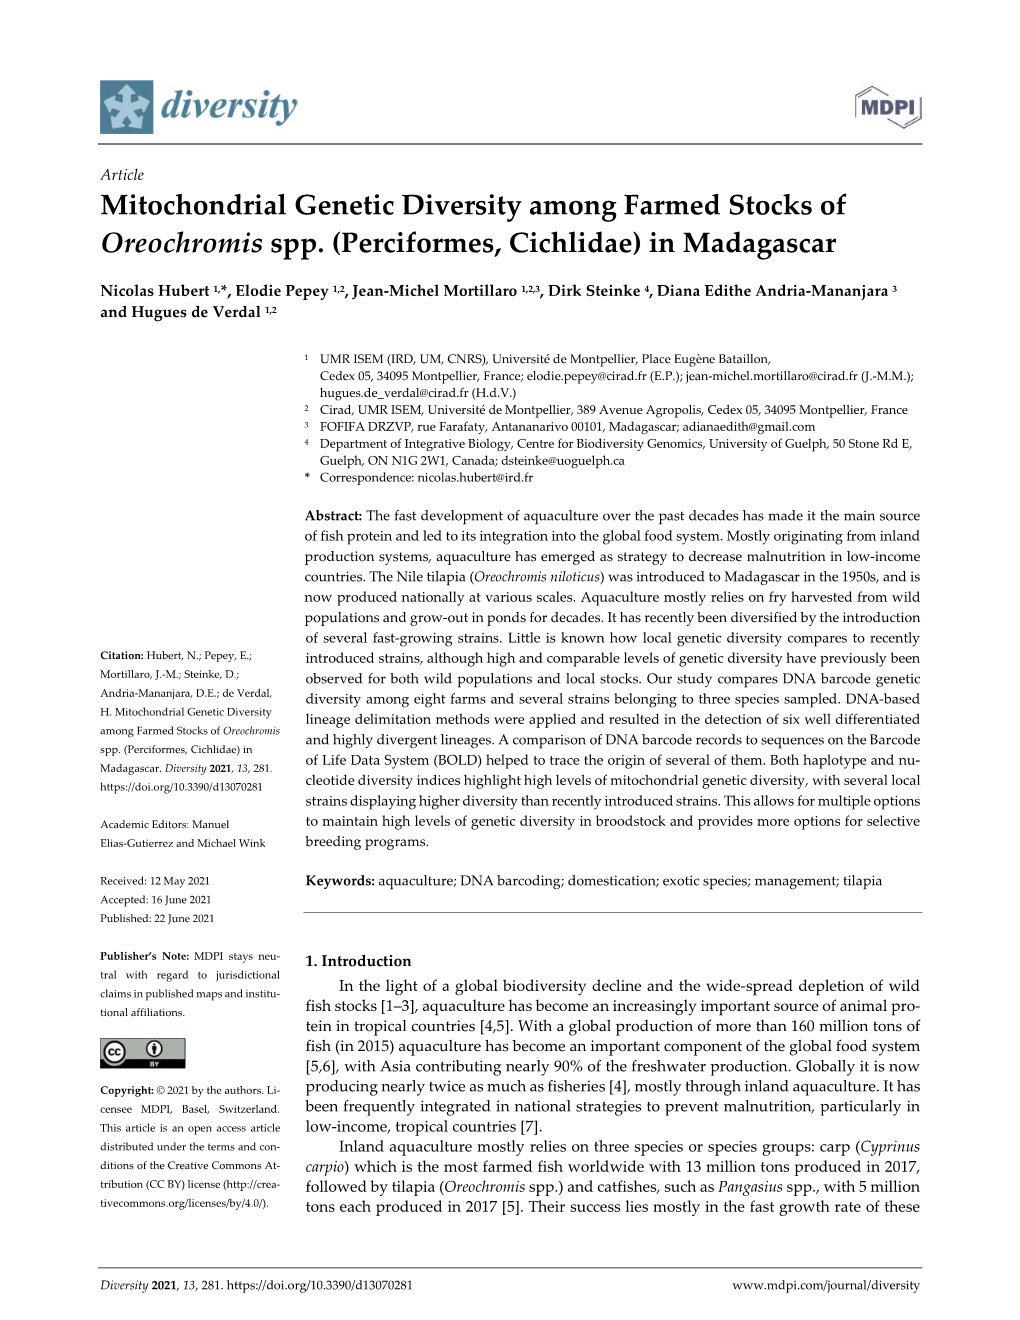 Mitochondrial Genetic Diversity Among Farmed Stocks of Oreochromis Spp